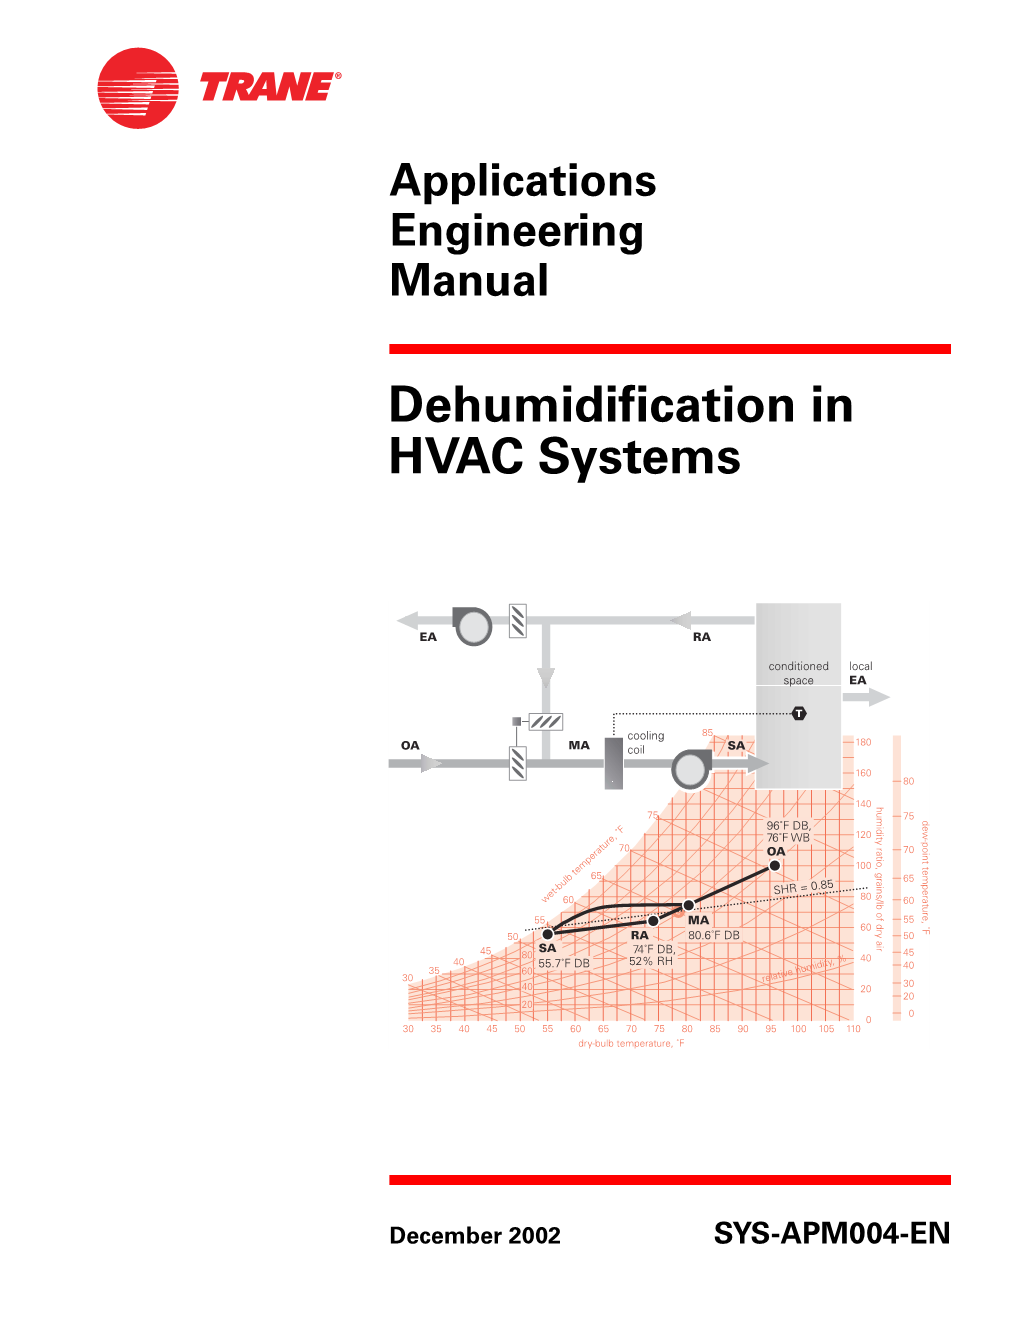 Dehumidification in HVAC Systems